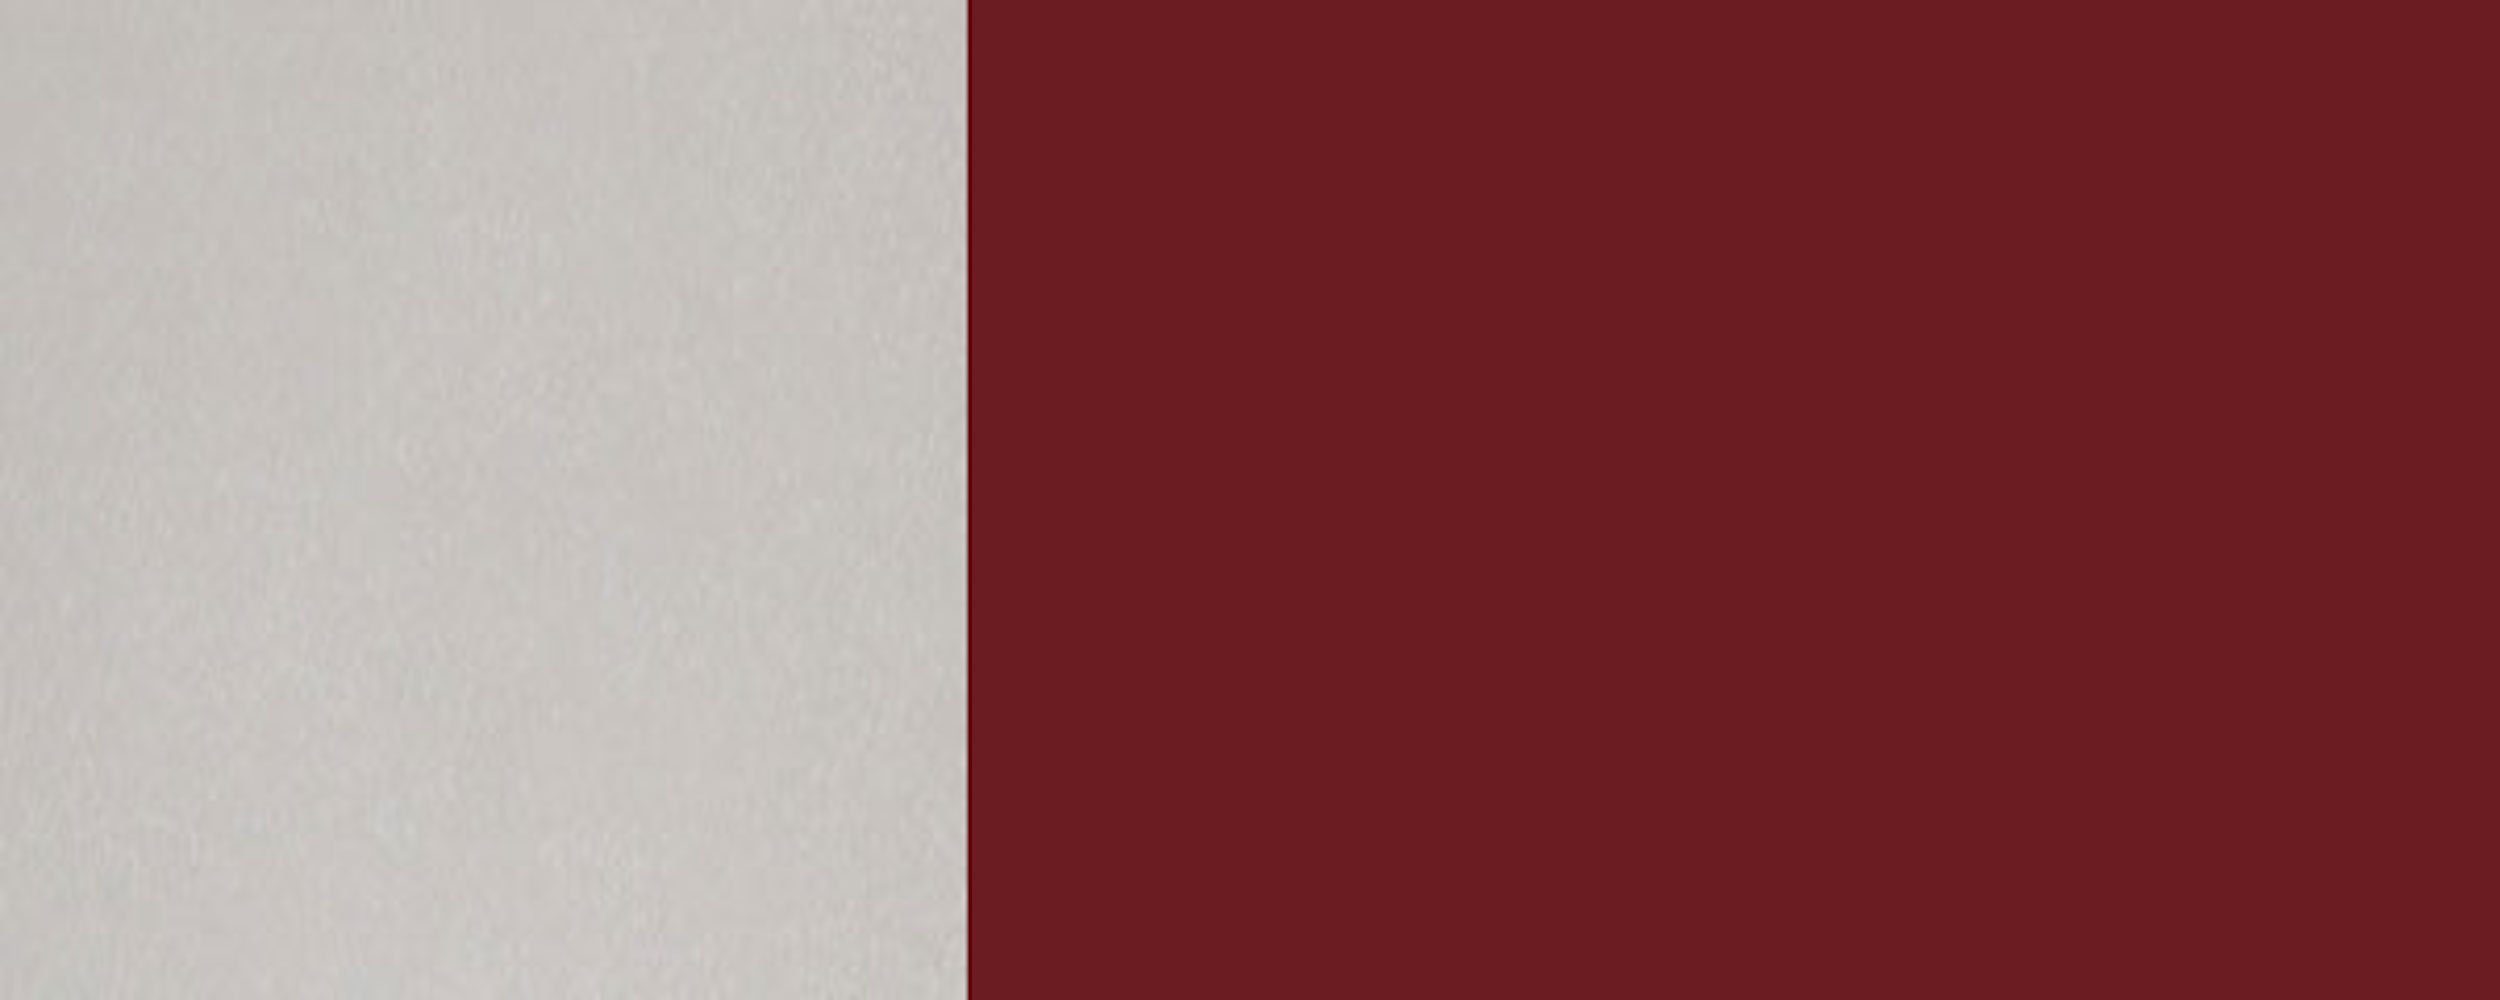 Front- und 1-türig RAL matt Rimini Feldmann-Wohnen purpurrot wählbar Korpusfarbe Klapphängeschrank (Rimini) 3004 30cm